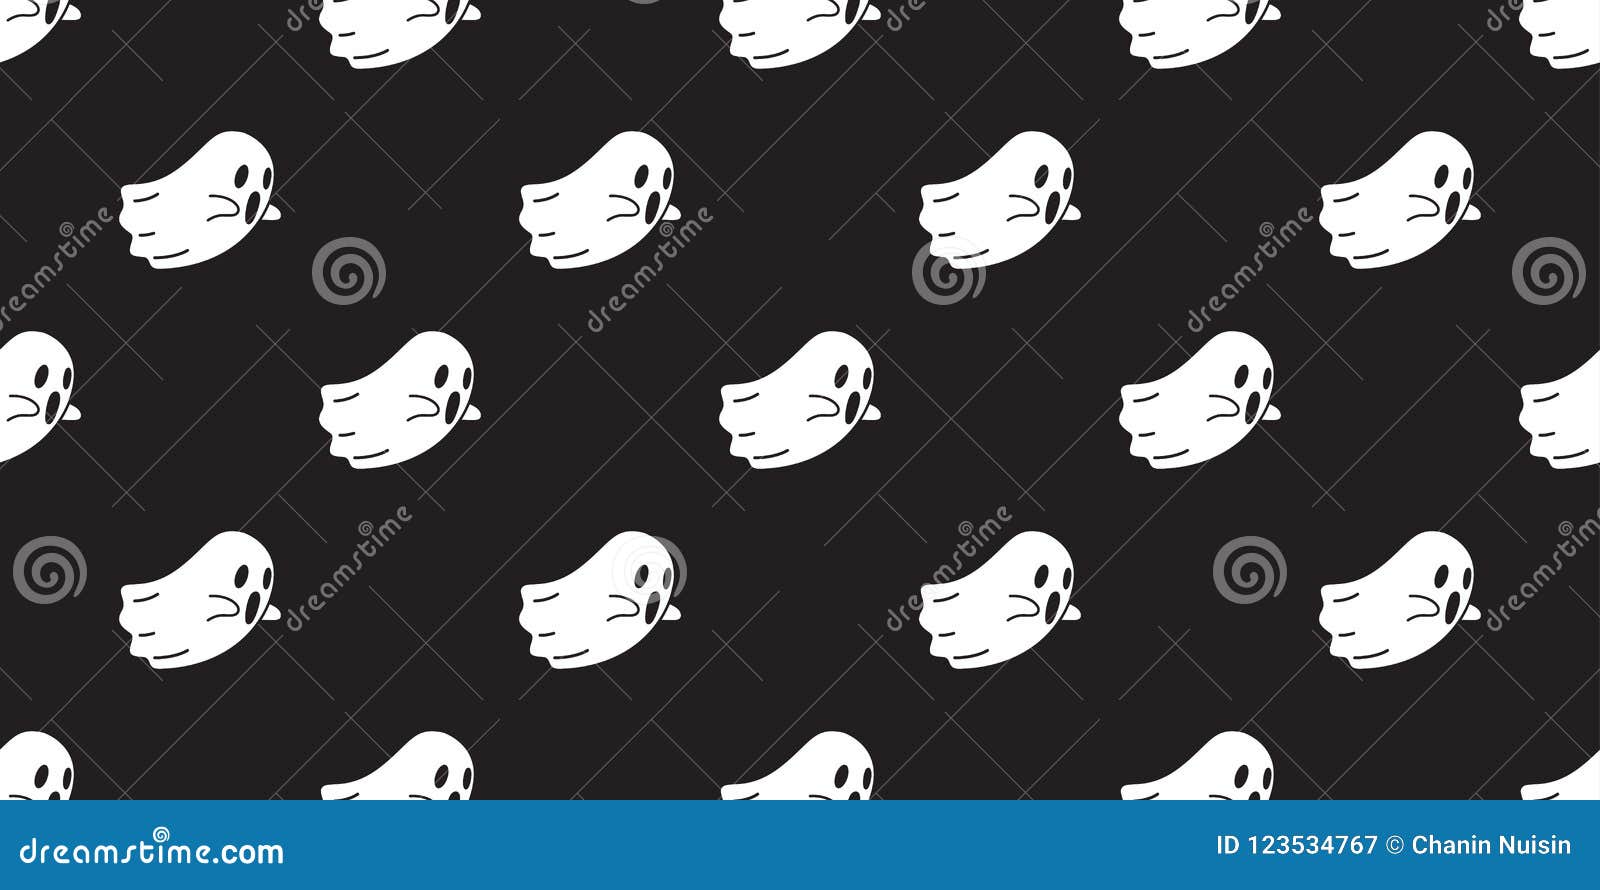 20 Preppy Halloween Wallpaper Ideas  Floating Ghosts I Take You  Wedding  Readings  Wedding Ideas  Wedding Dresses  Wedding Theme